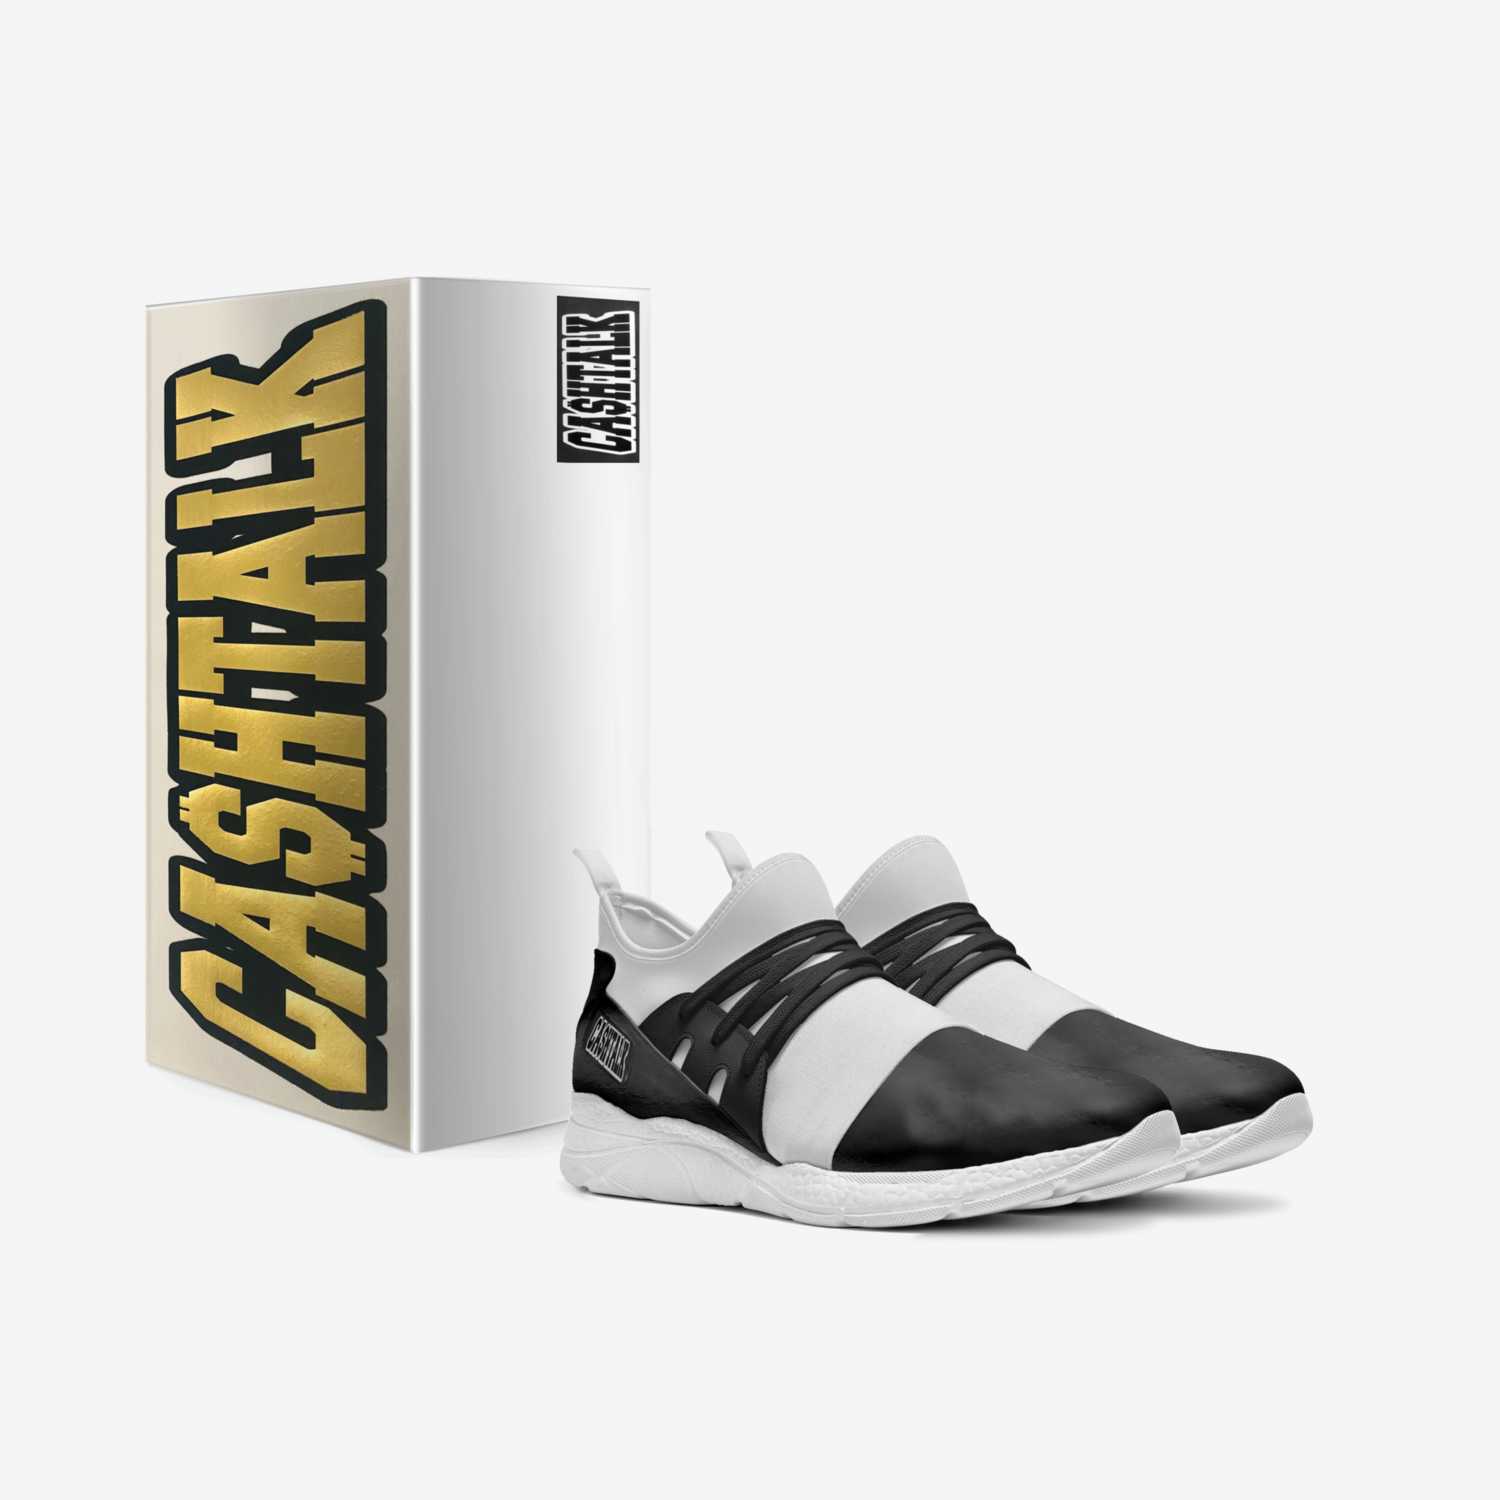 CA$HTALK 1’s custom made in Italy shoes by Charis Dottin | Box view